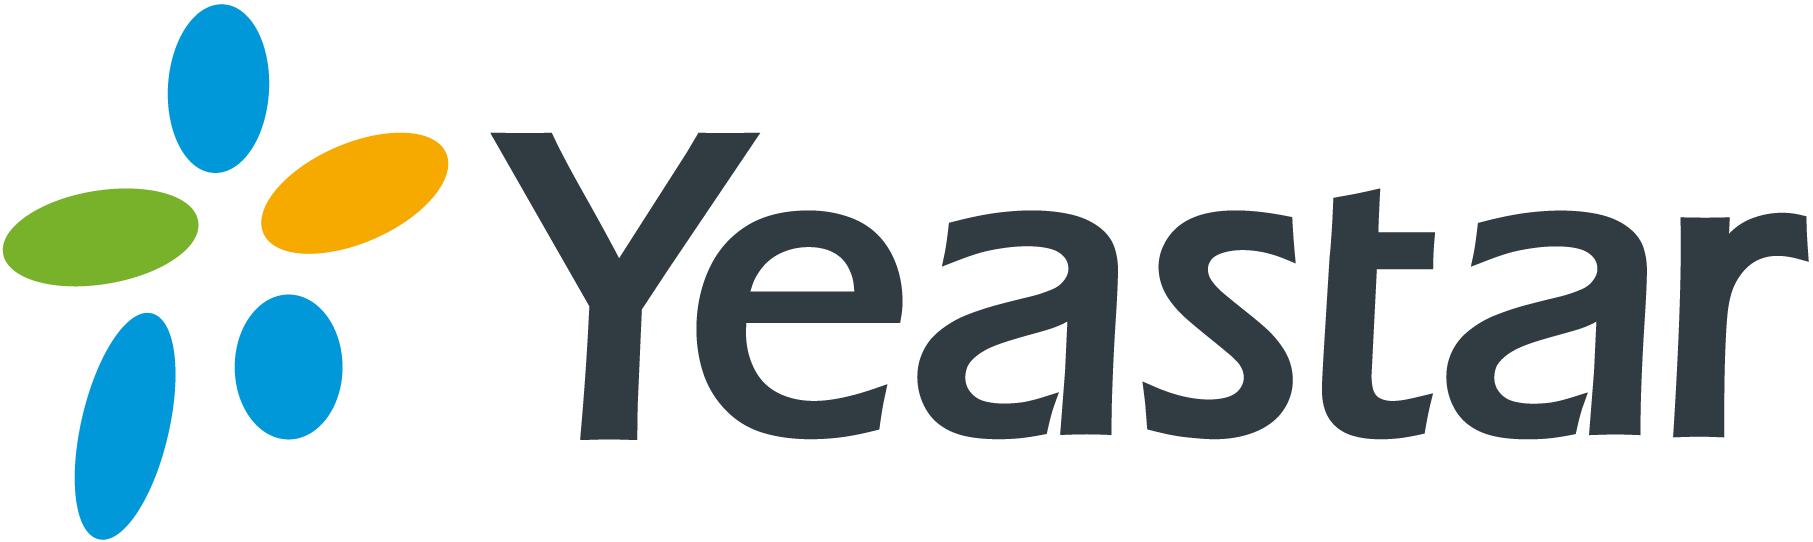 Yeastar-logo